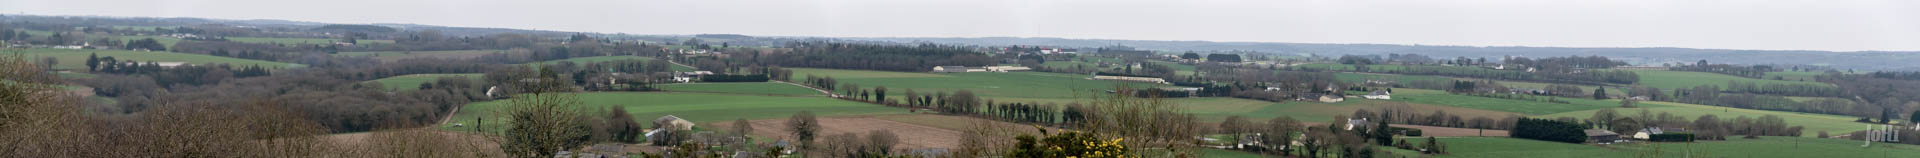 Panorama de la campagne.